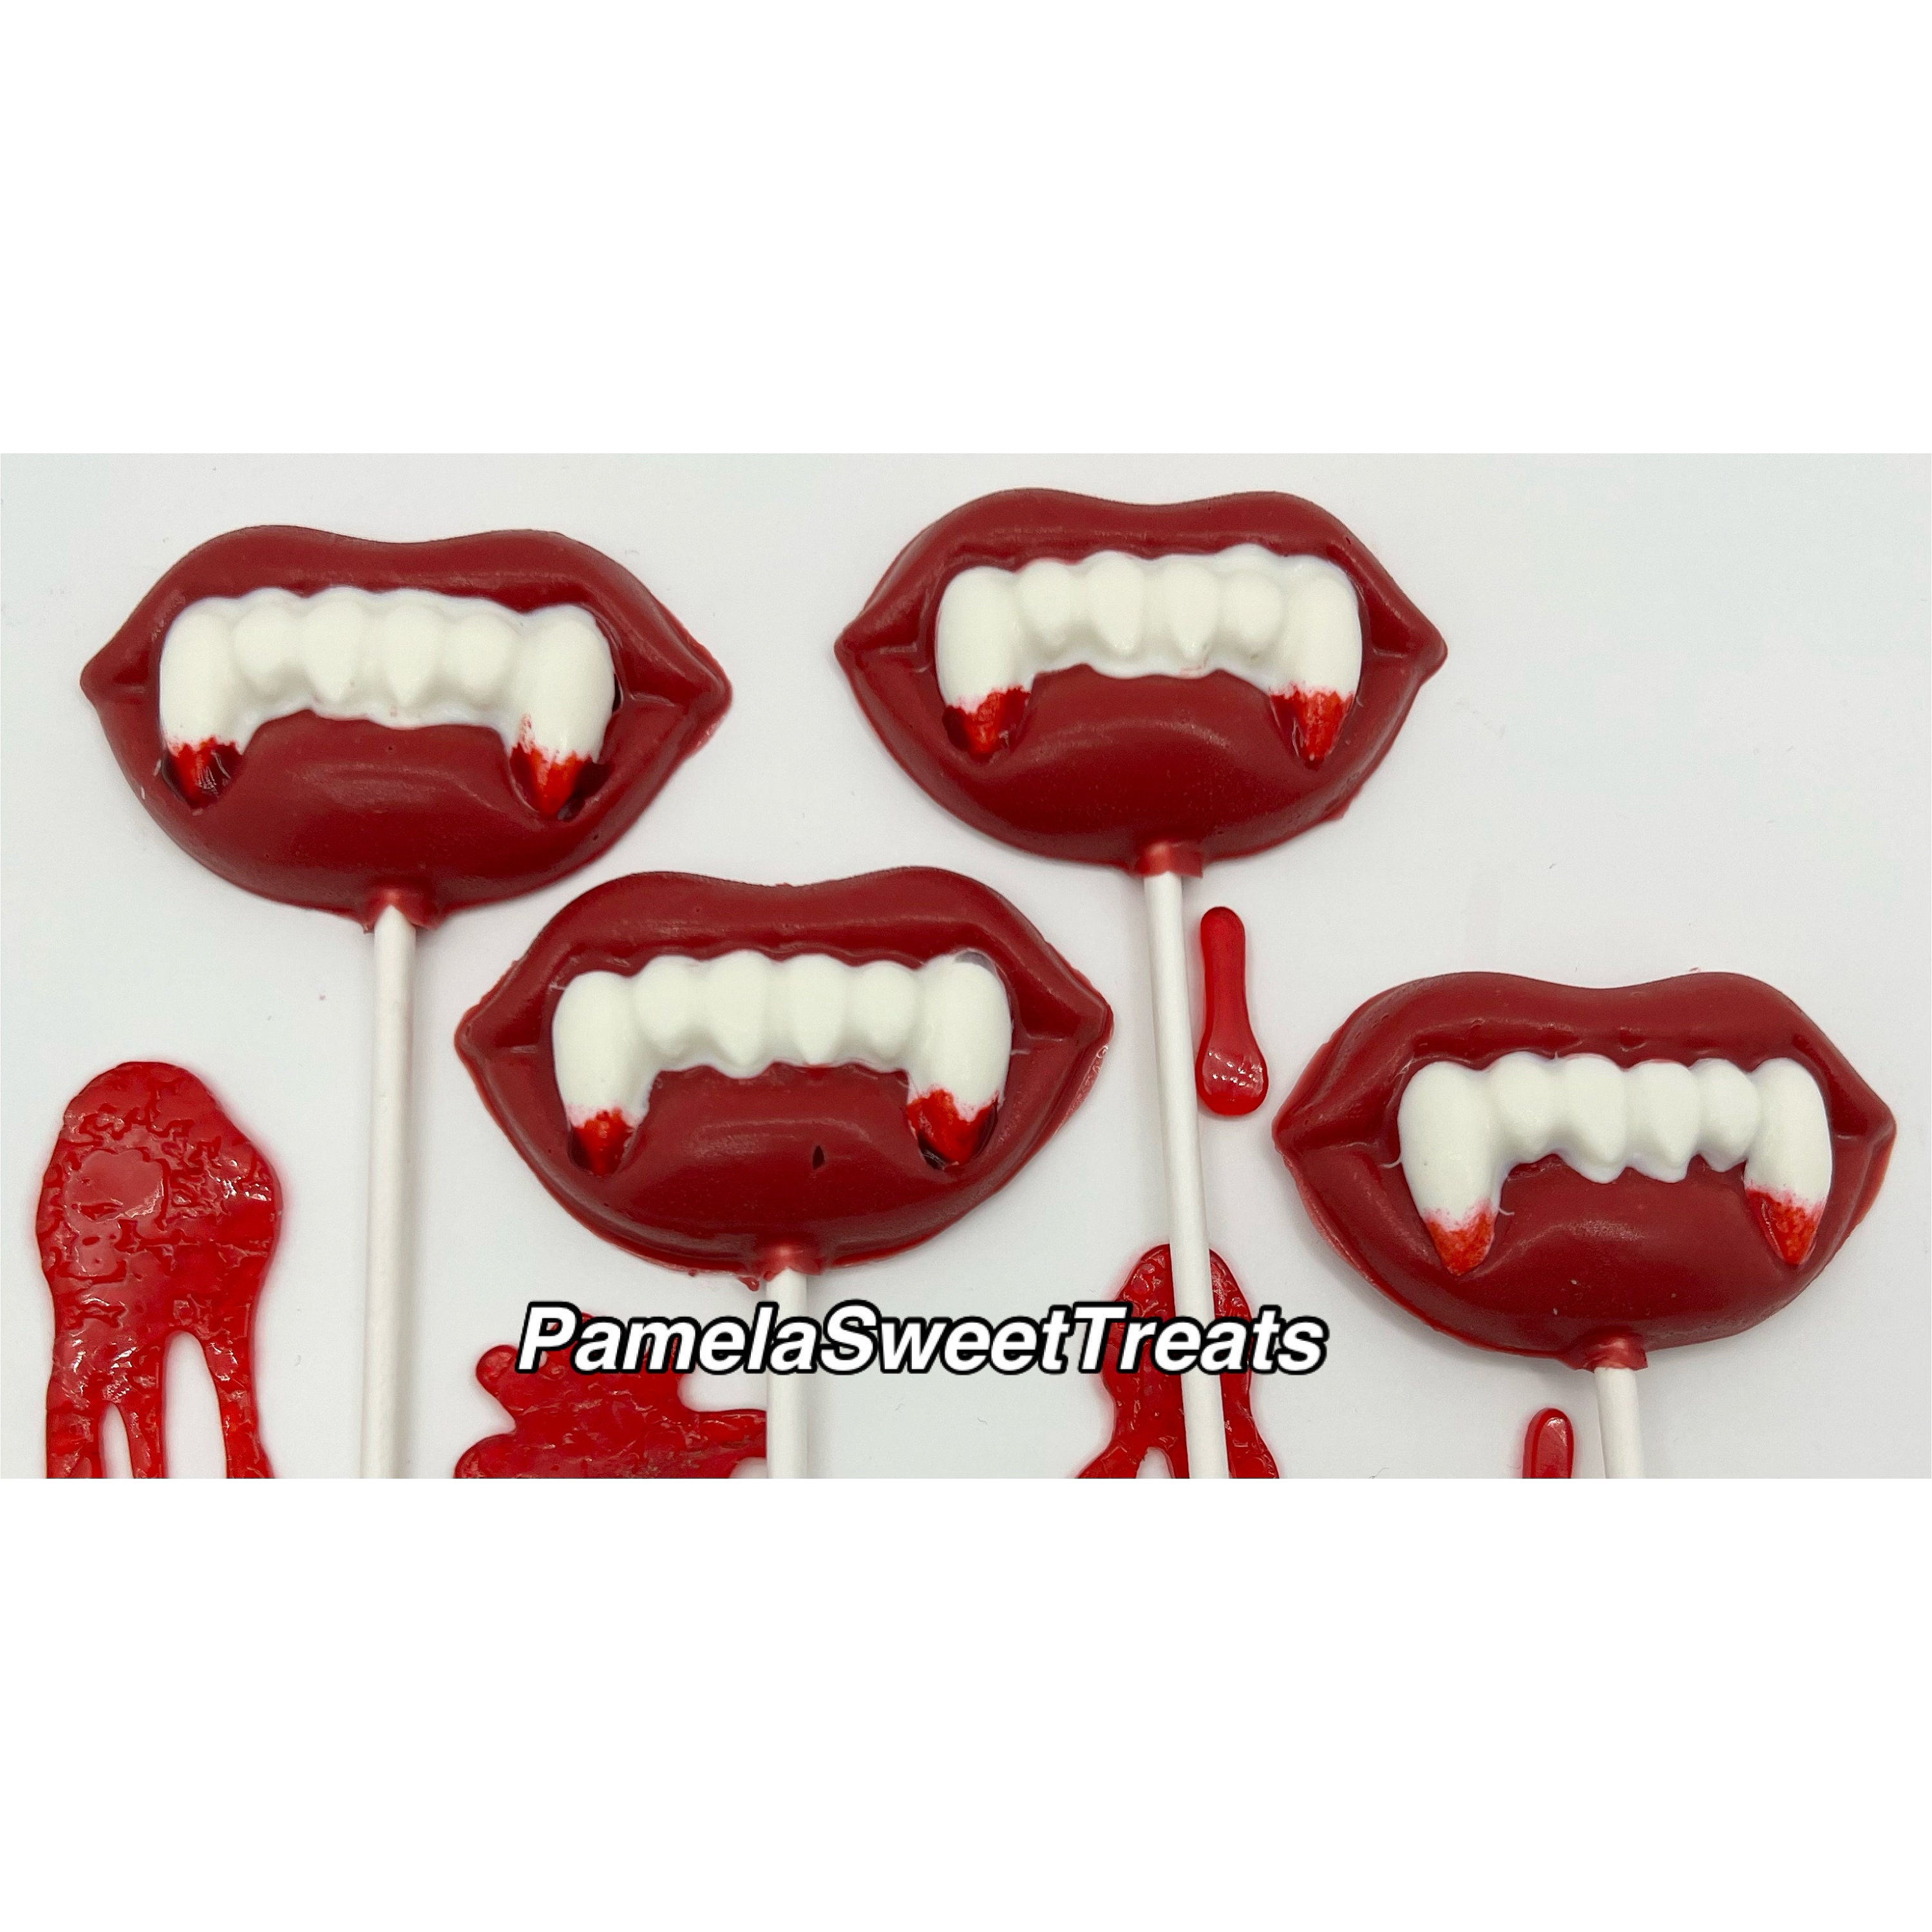 Halloween Wax Lips and Teeth - Devoted Family Dental